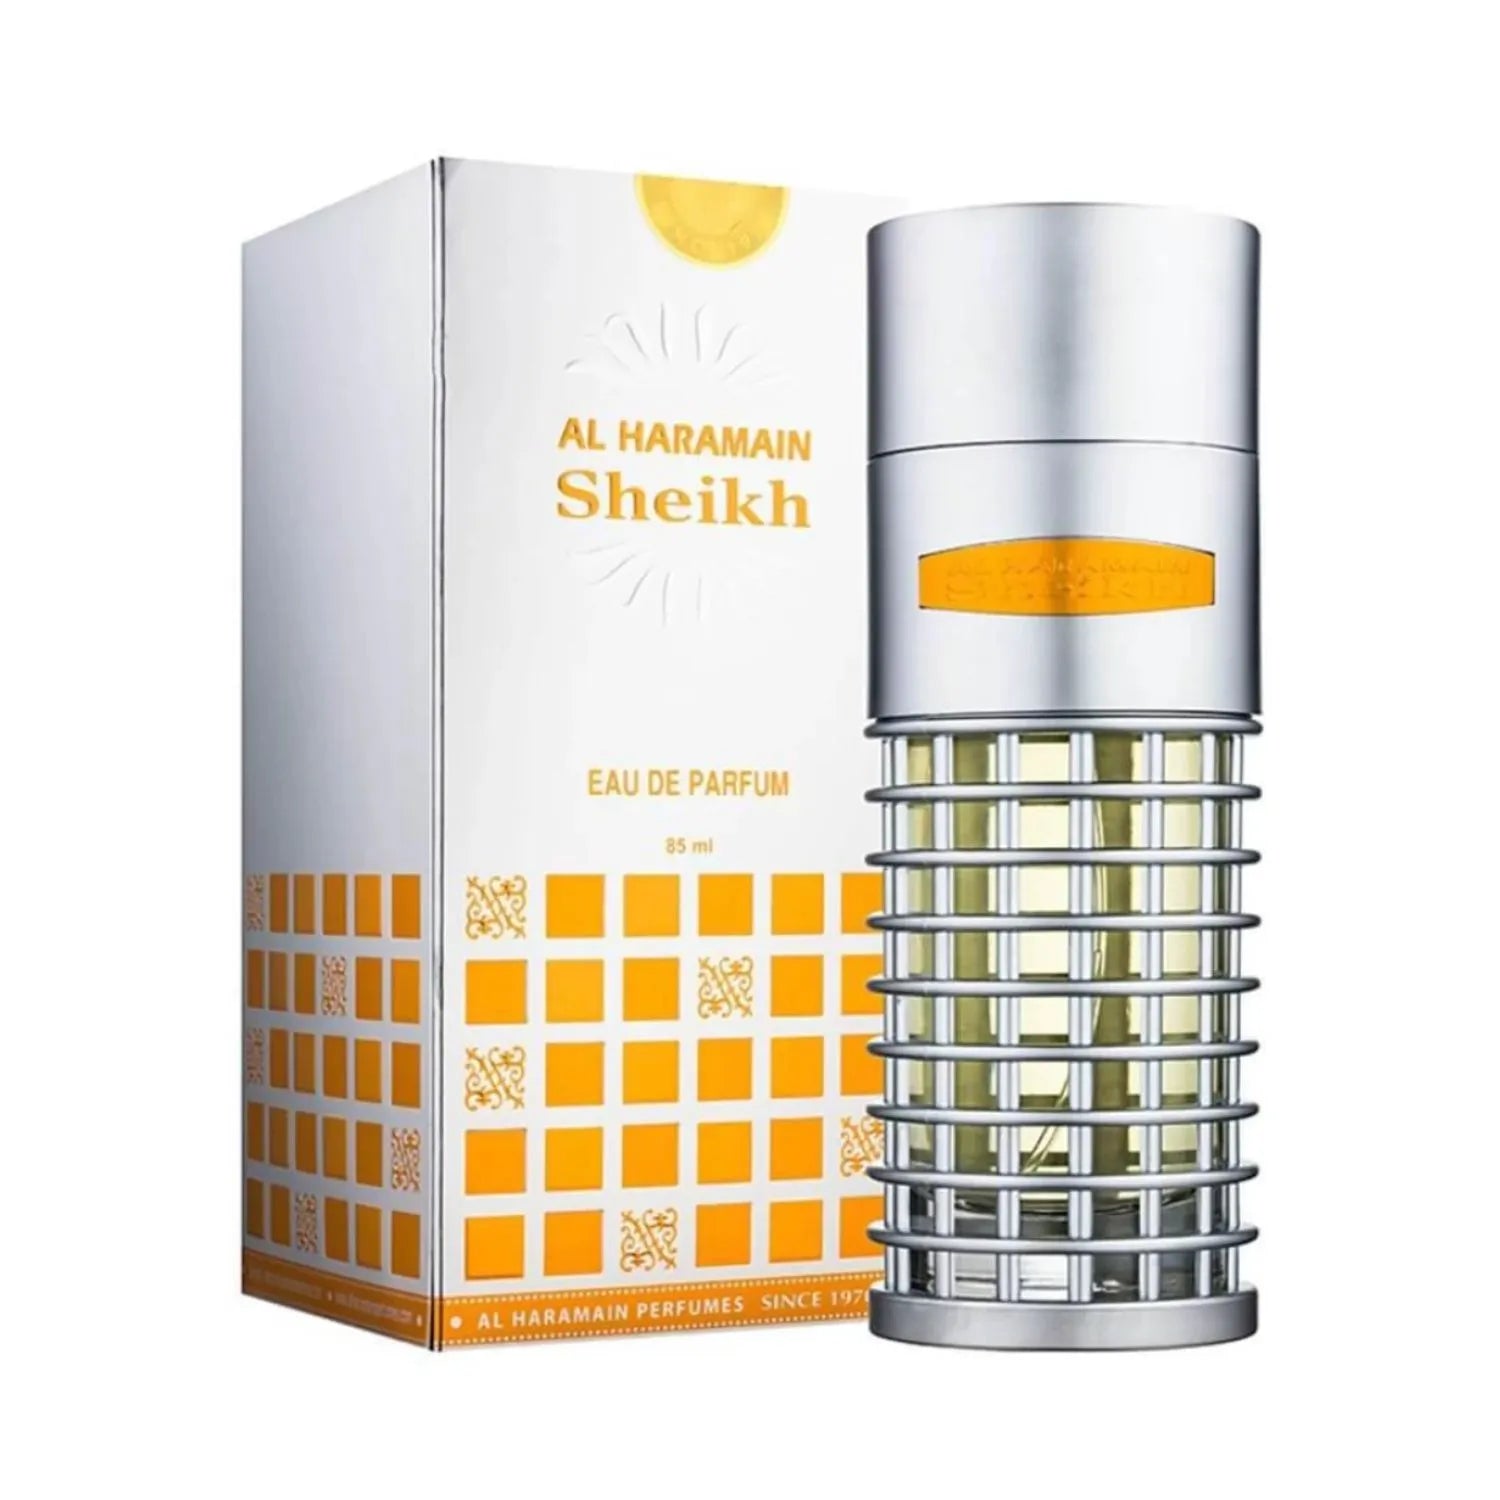 Sheikh Perfume Bottle Box